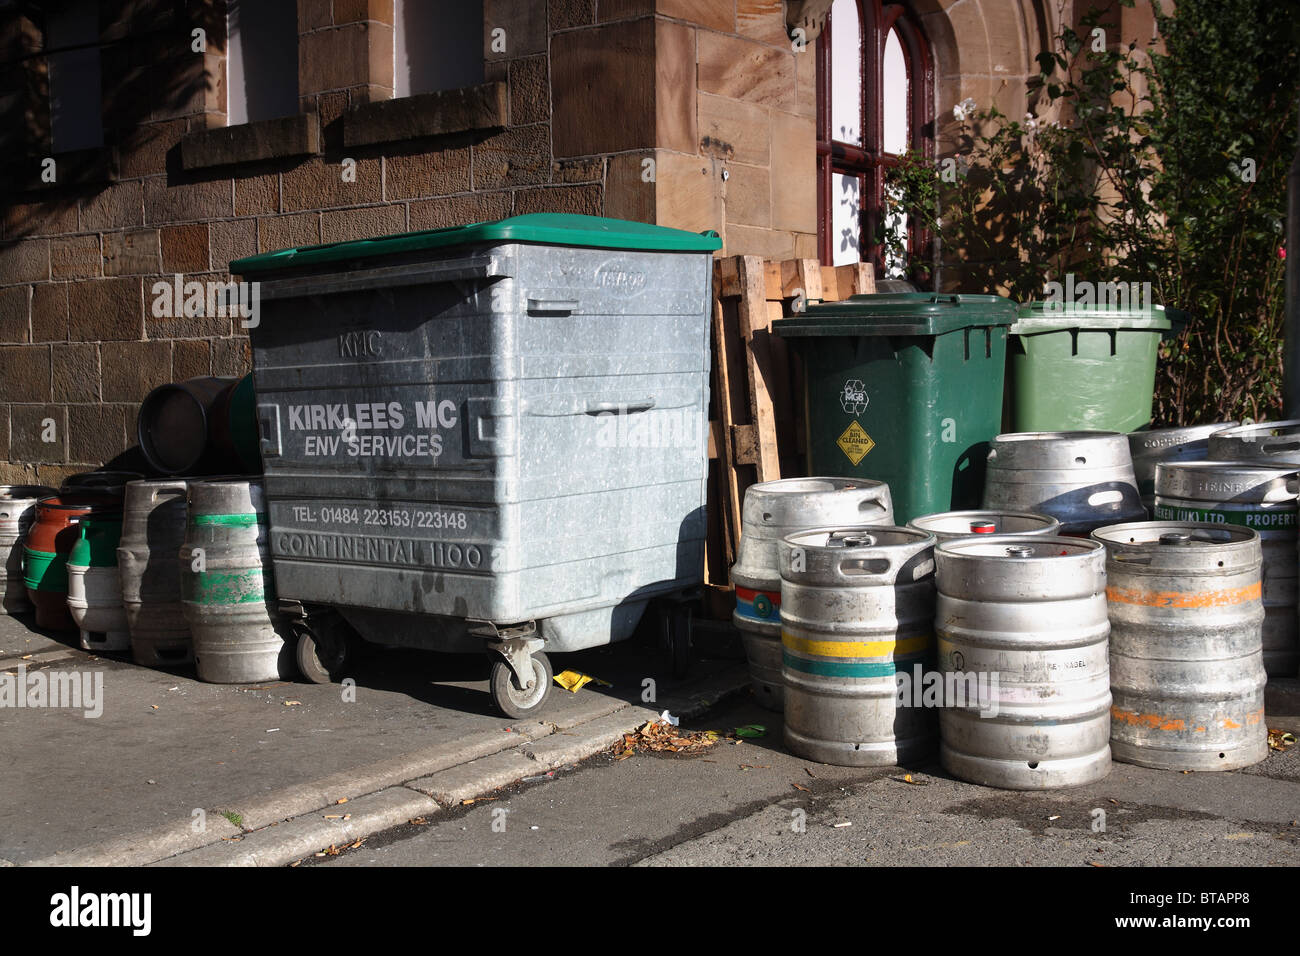 kegs and bin outside dewsbury pub Stock Photo